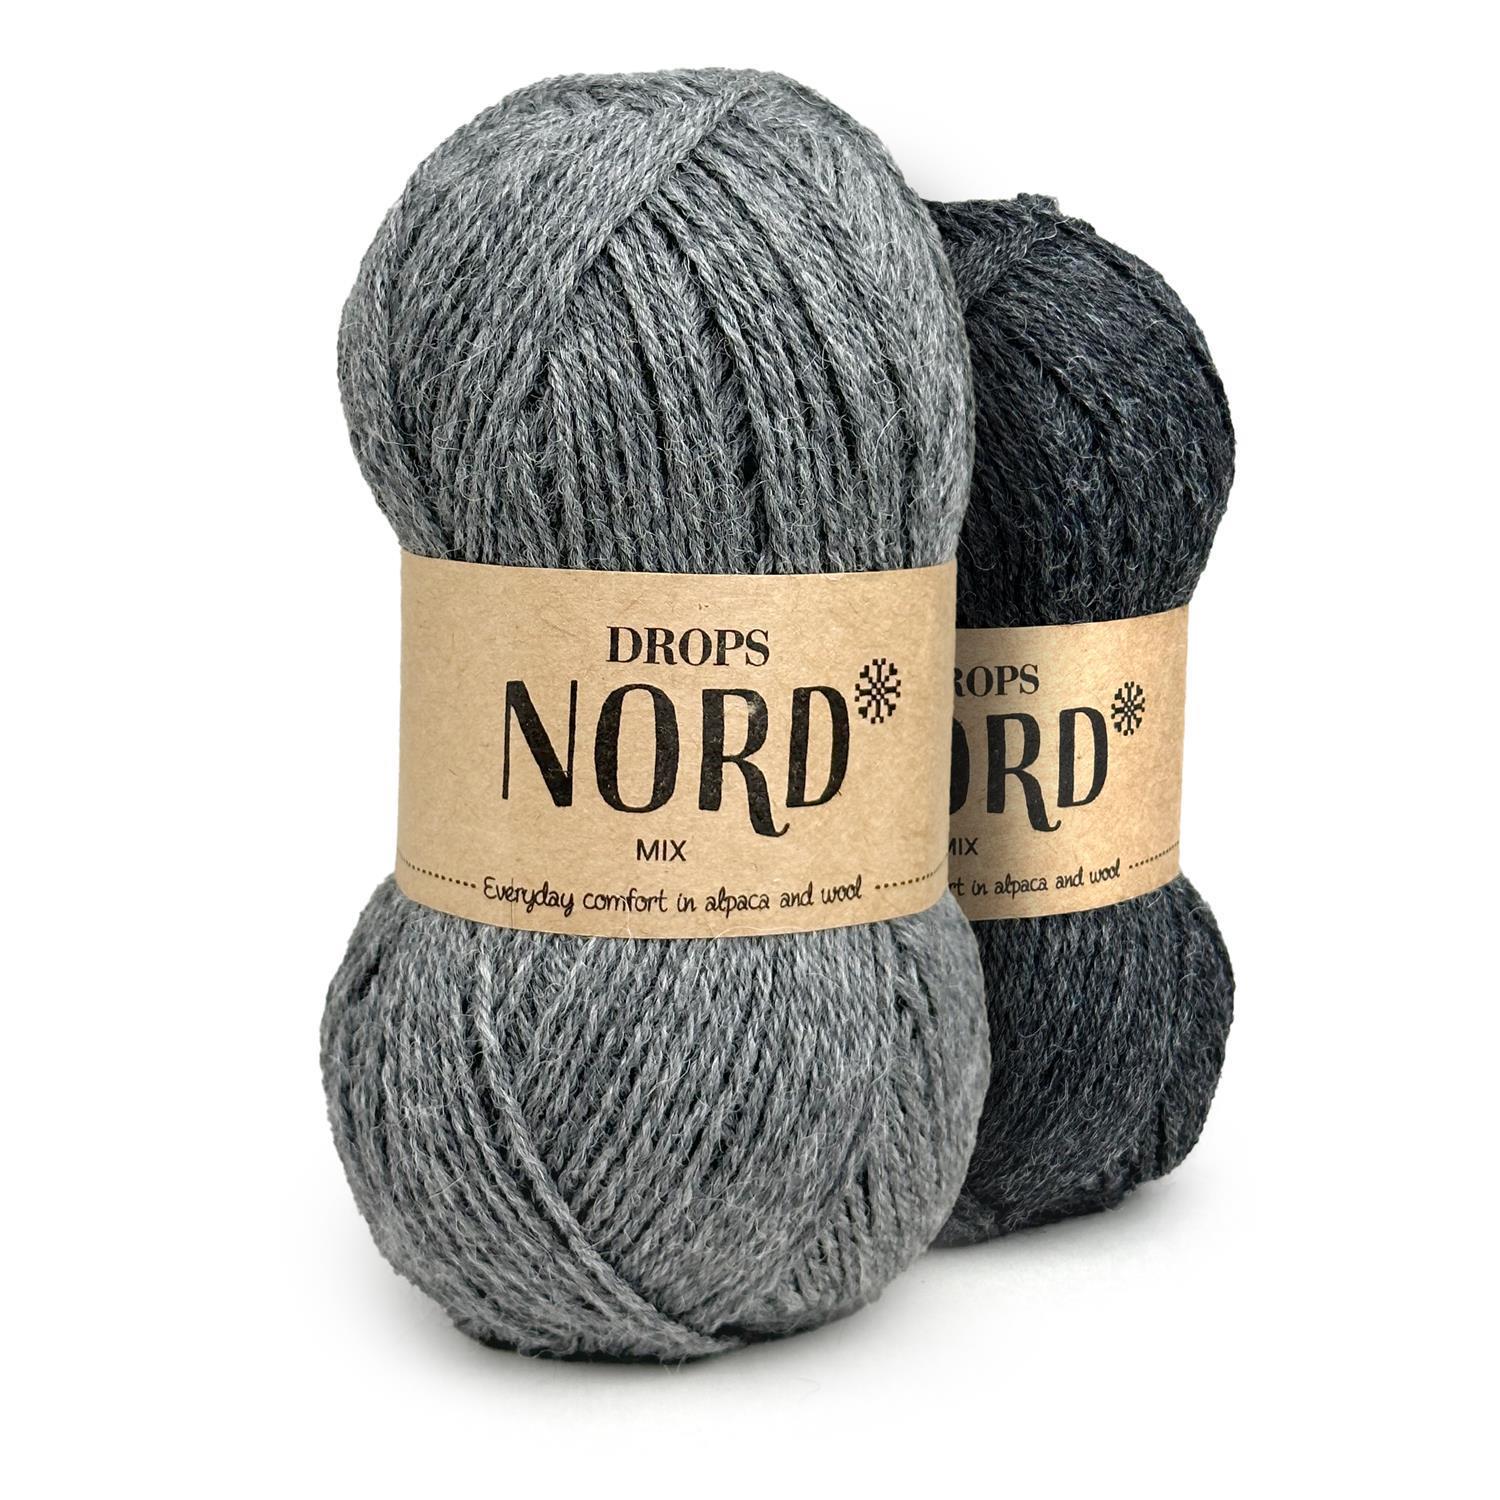 DROPS Nord Mix (50g/170m) 06 dunkelgrau